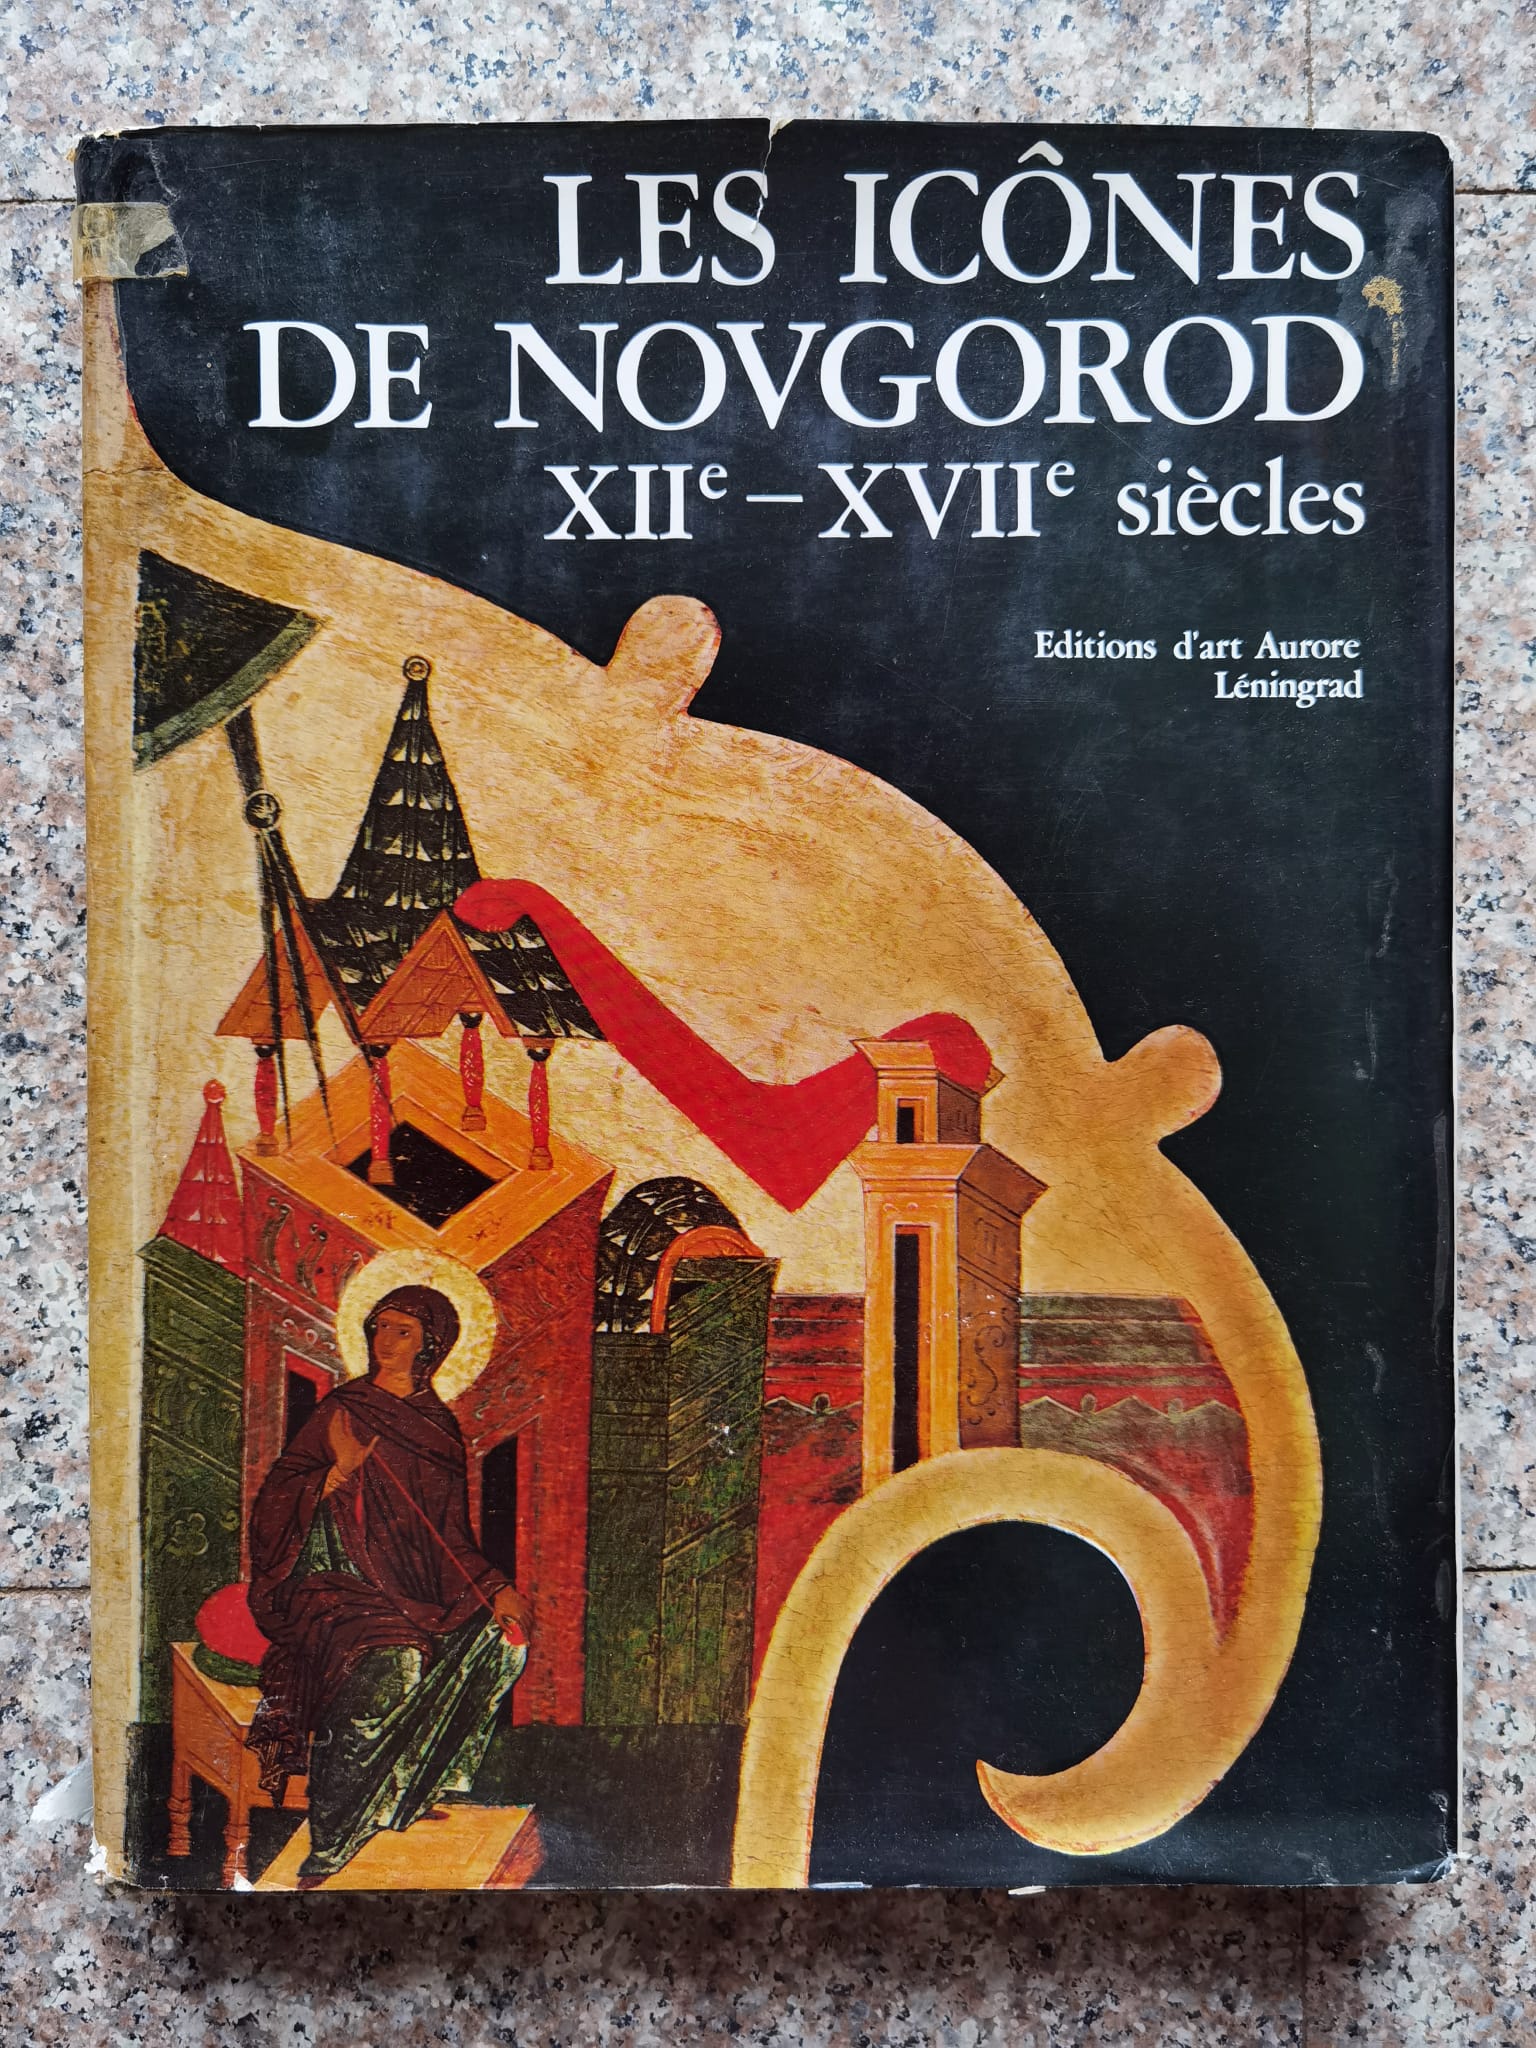 les icones de novgorod xii - xvii siecles                                                            colectiv                                                                                            